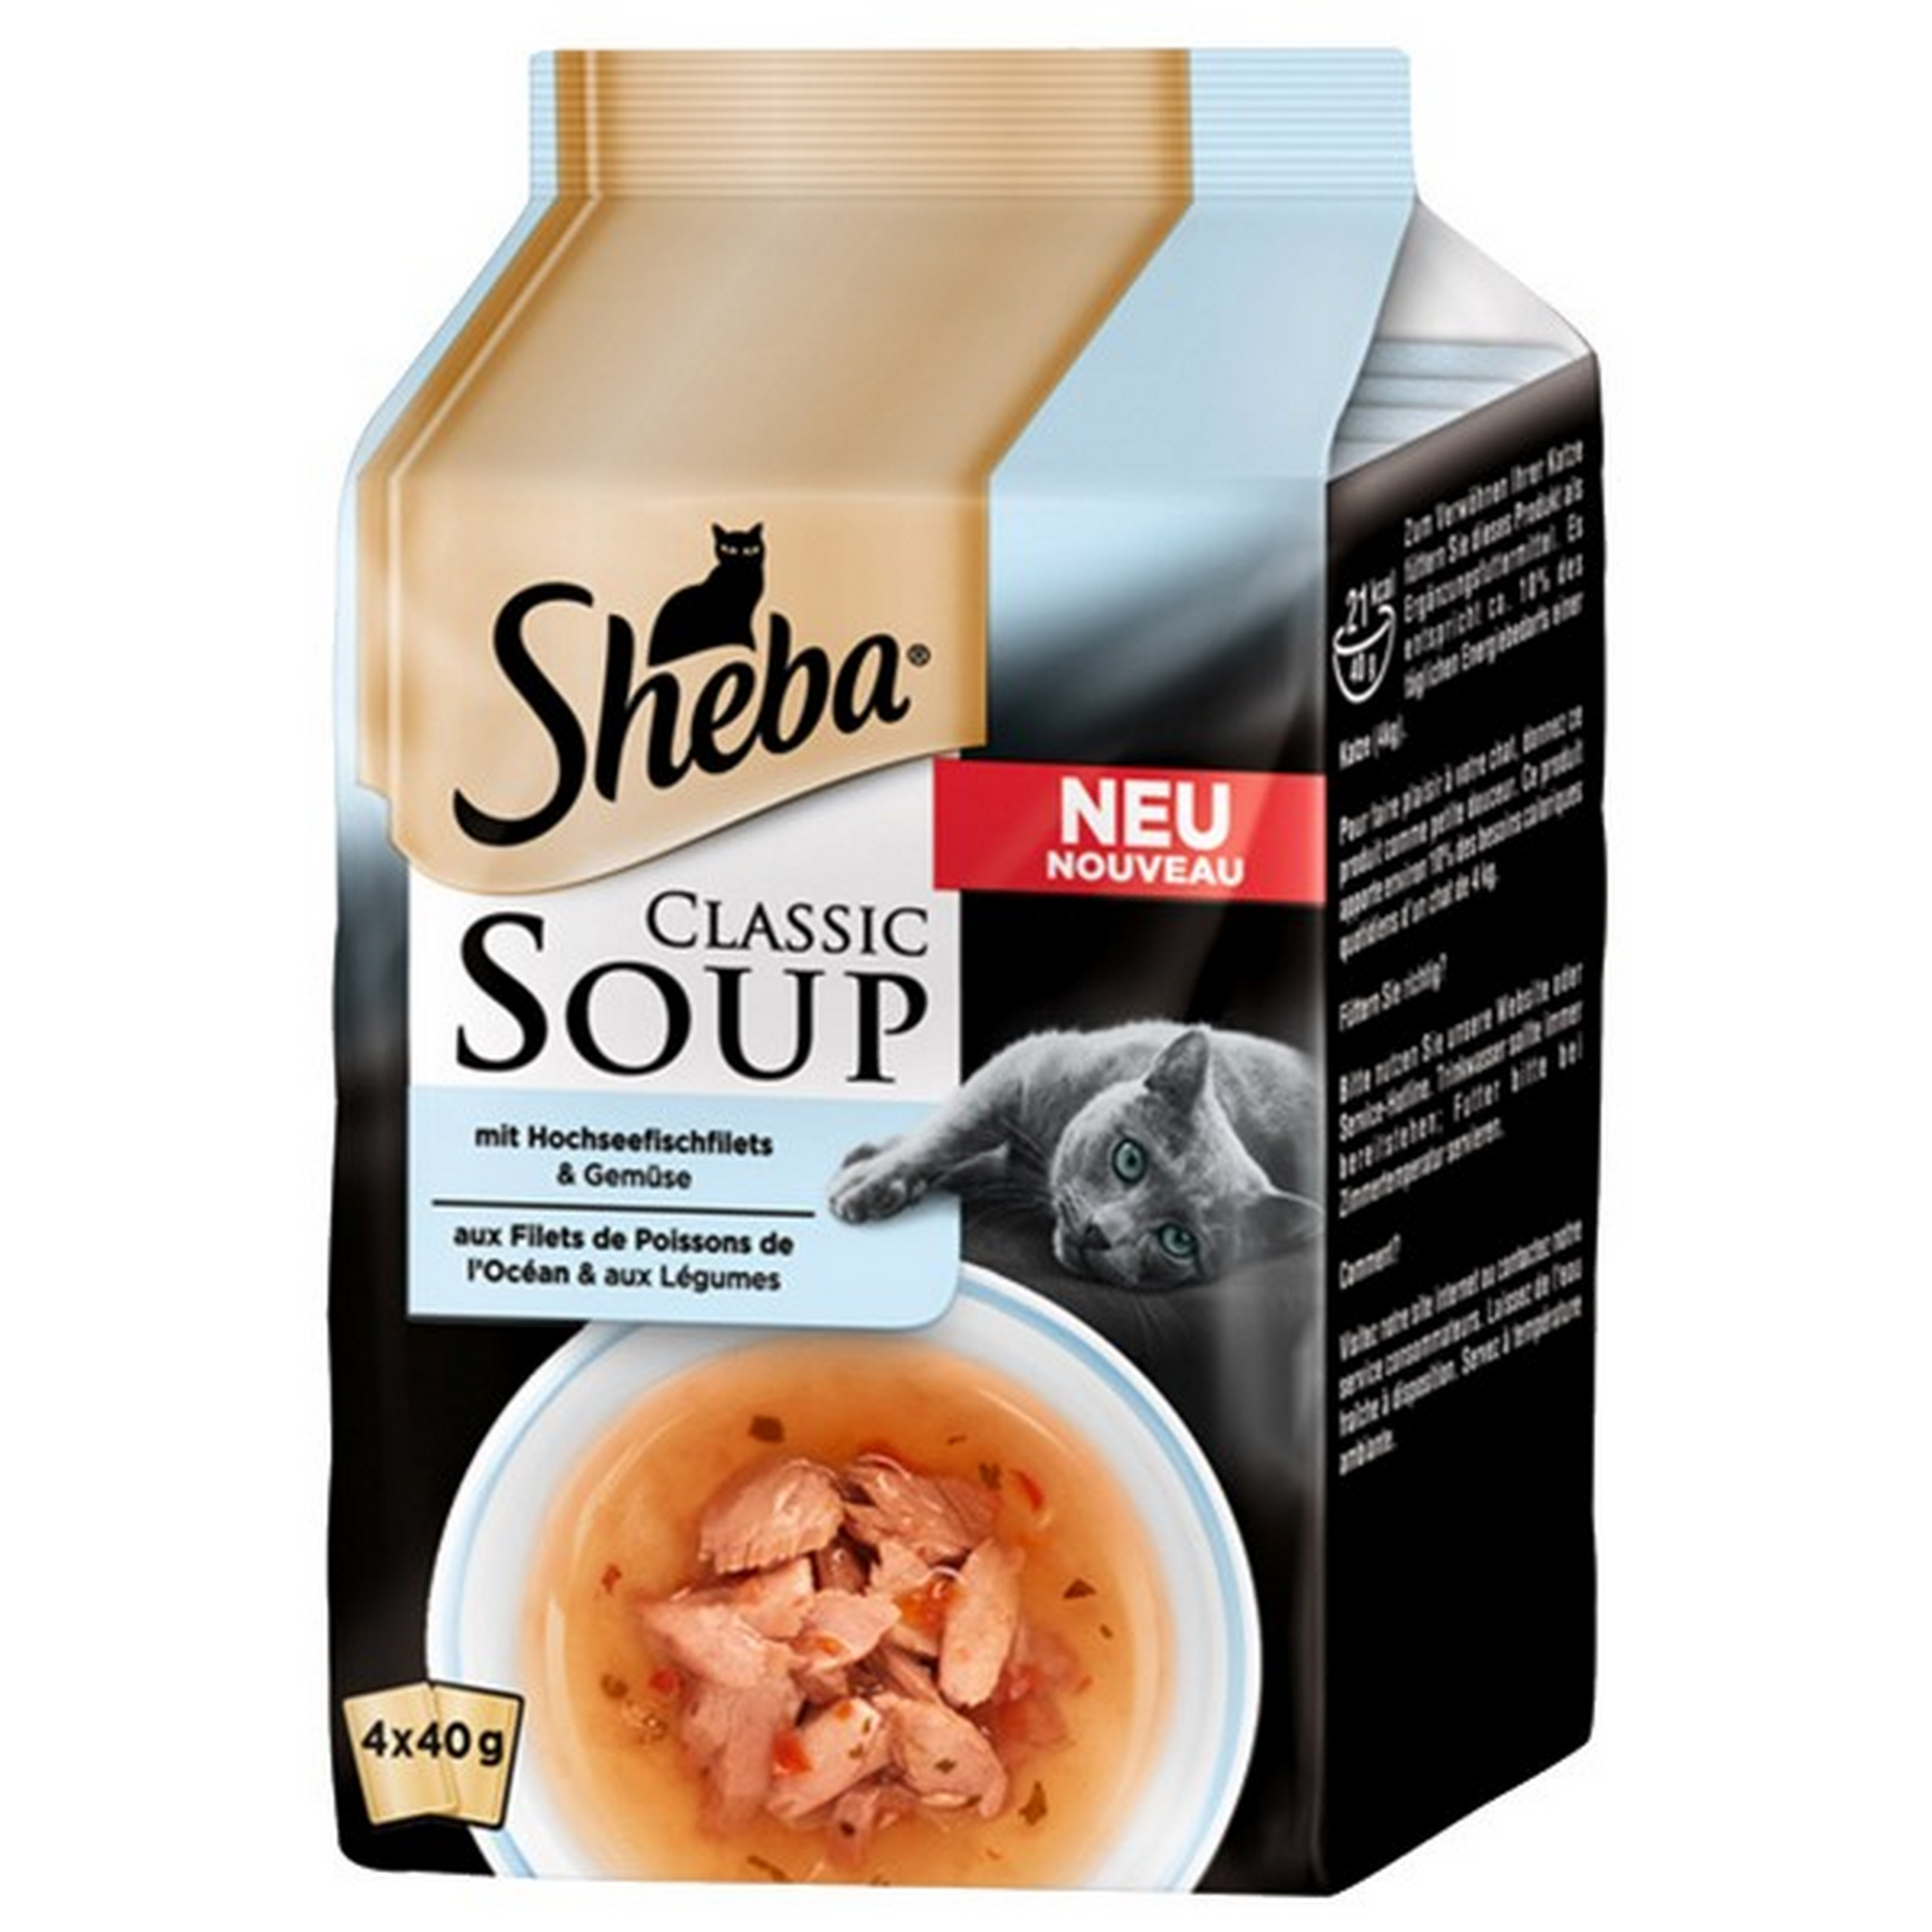 Sheba 'Soup' Hochseefischfilet und Gemüse Multipack 4 x 40 g + product picture